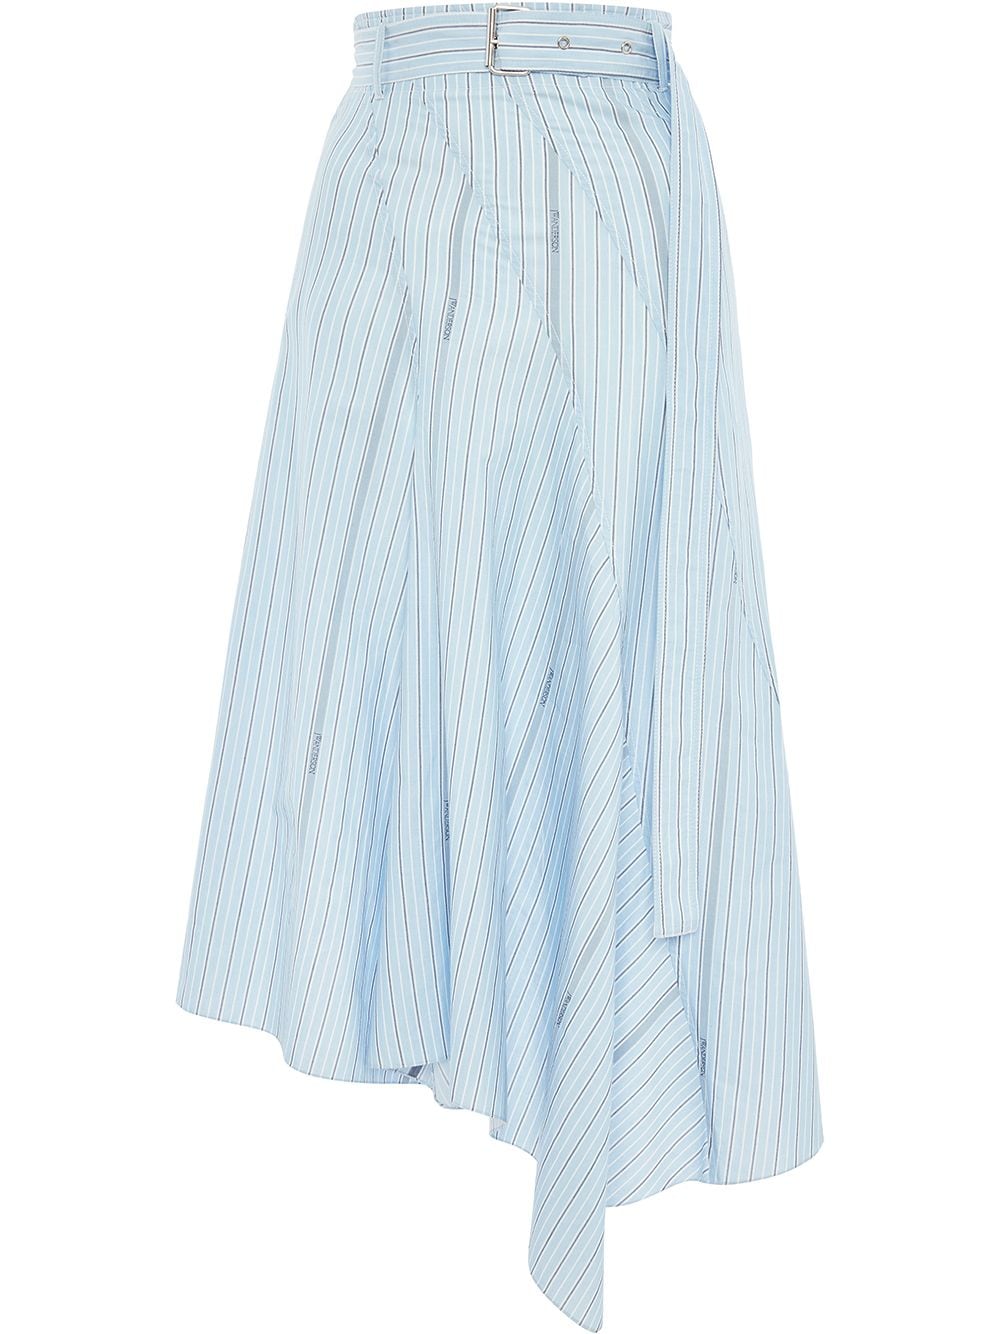 фото Jw anderson юбка асимметричного кроя со вставками и поясом